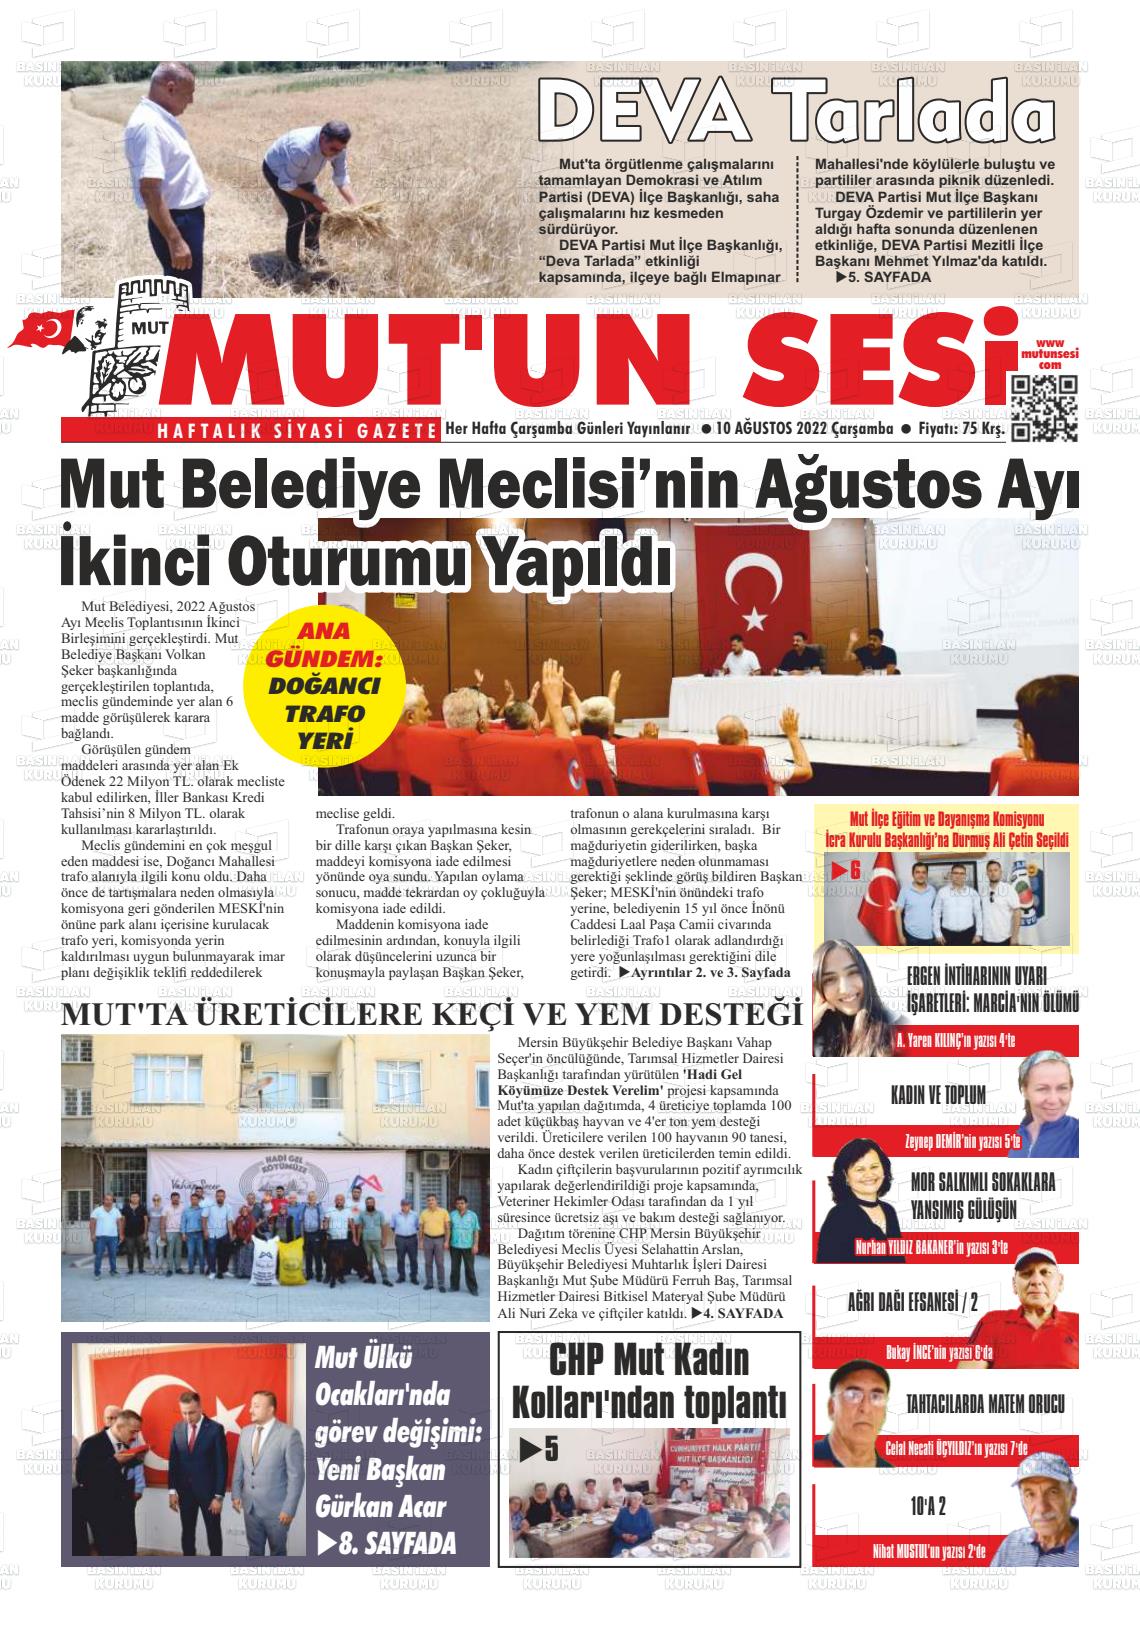 10 Ağustos 2022 Mut'un Sesi Gazete Manşeti